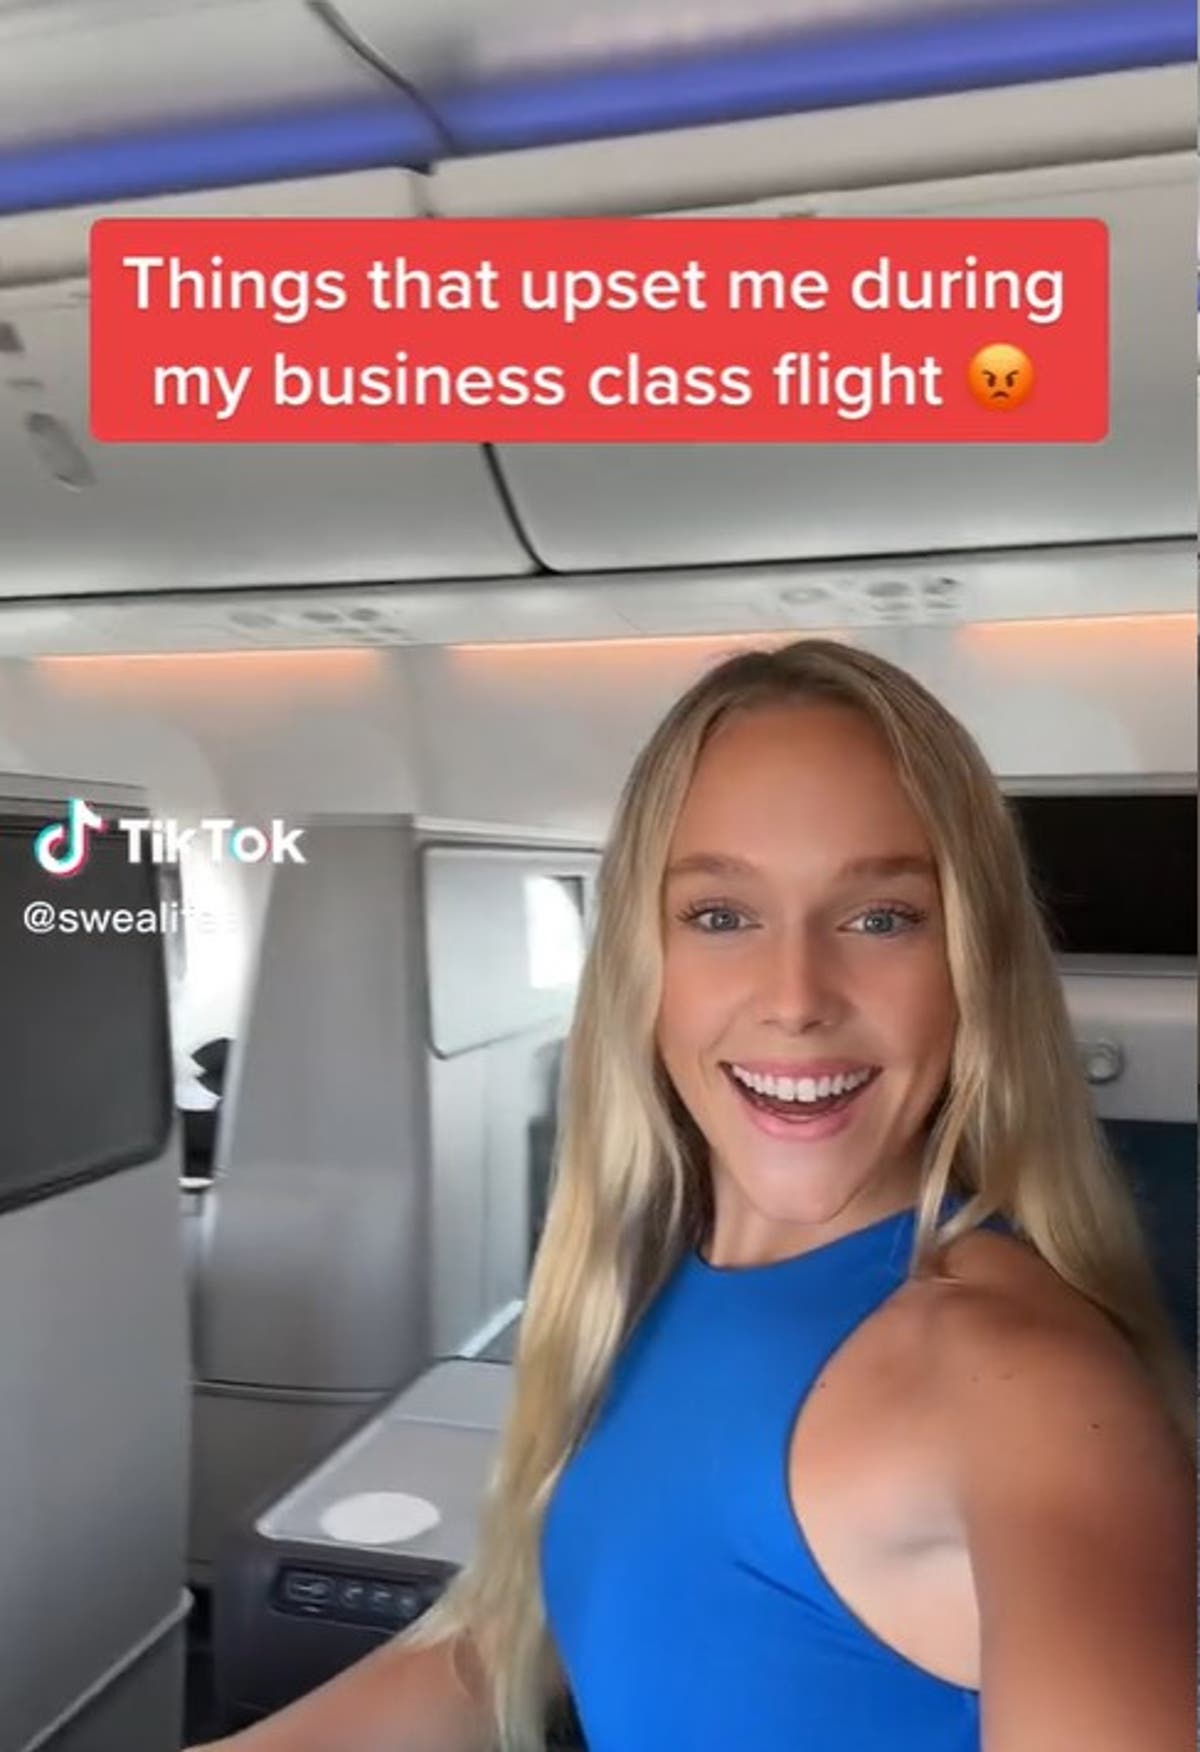 Travel influencer’s list of business class ‘complaints’ goes viral